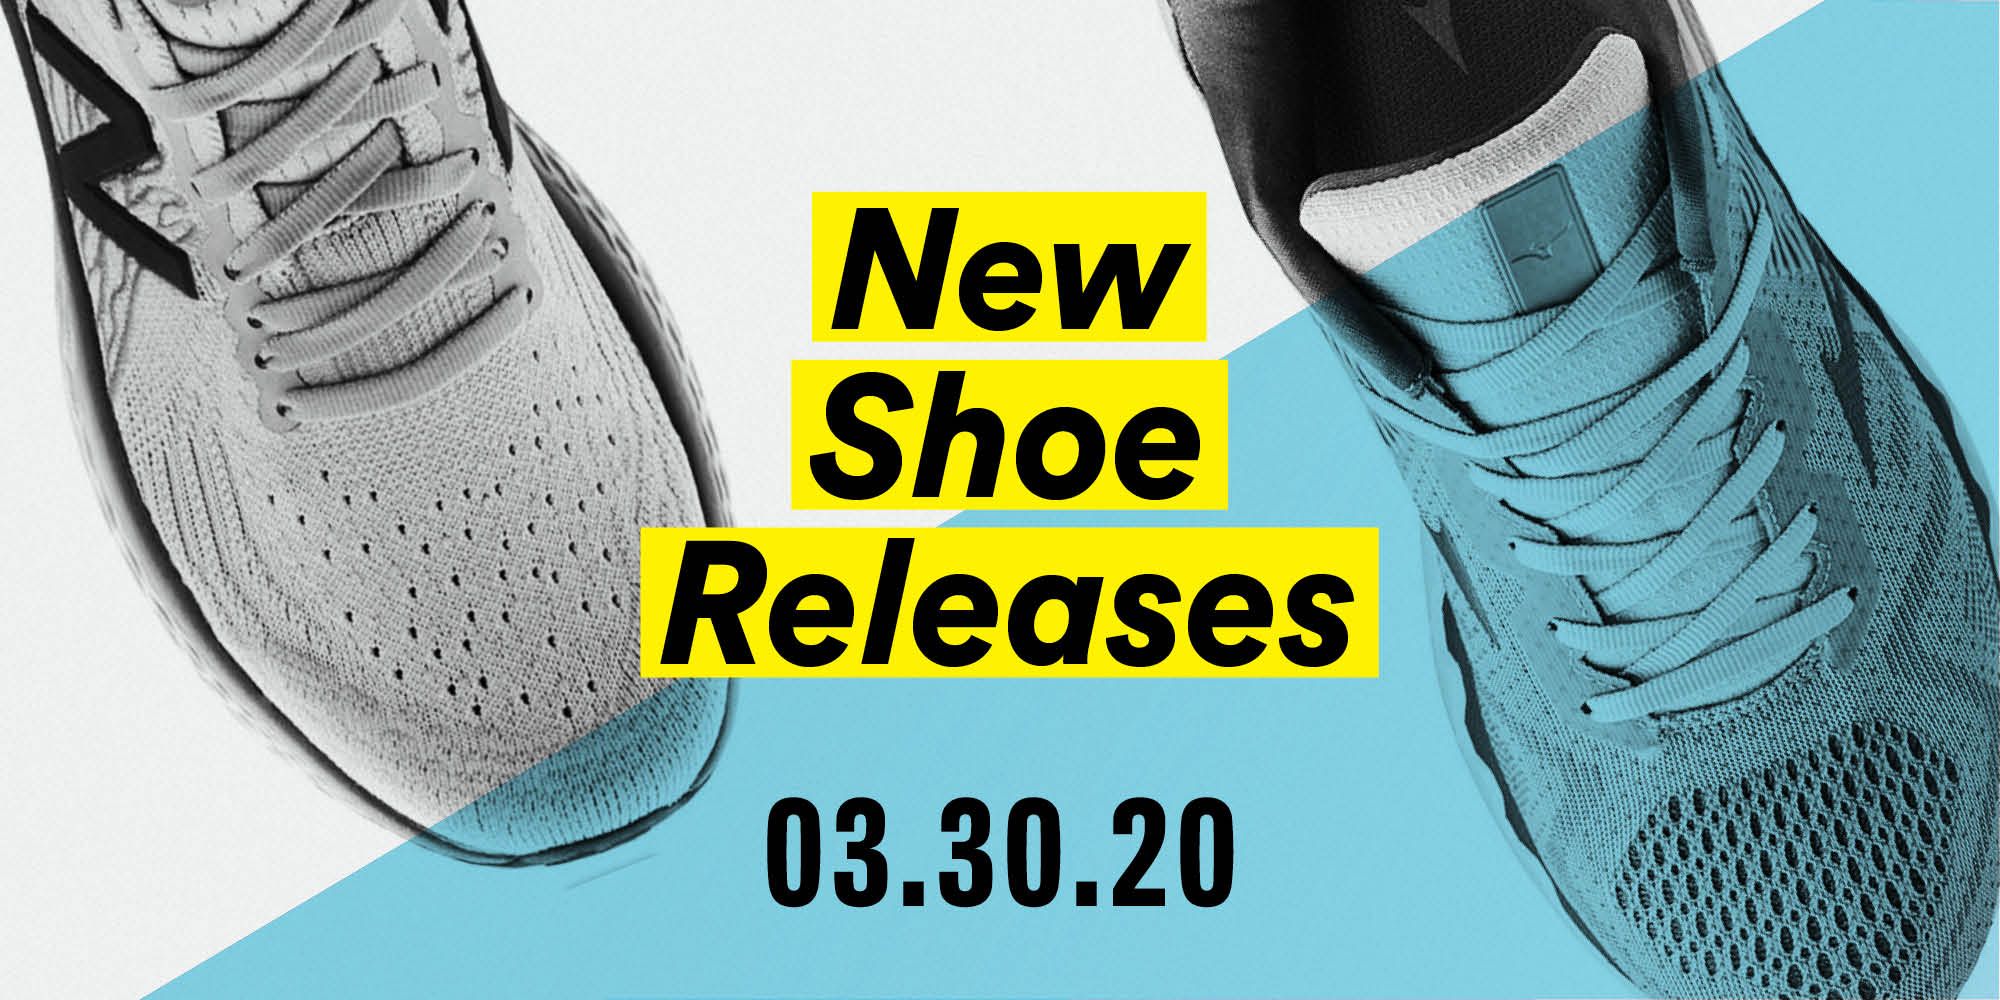 Best New Sneakers June 2020 | Cool 